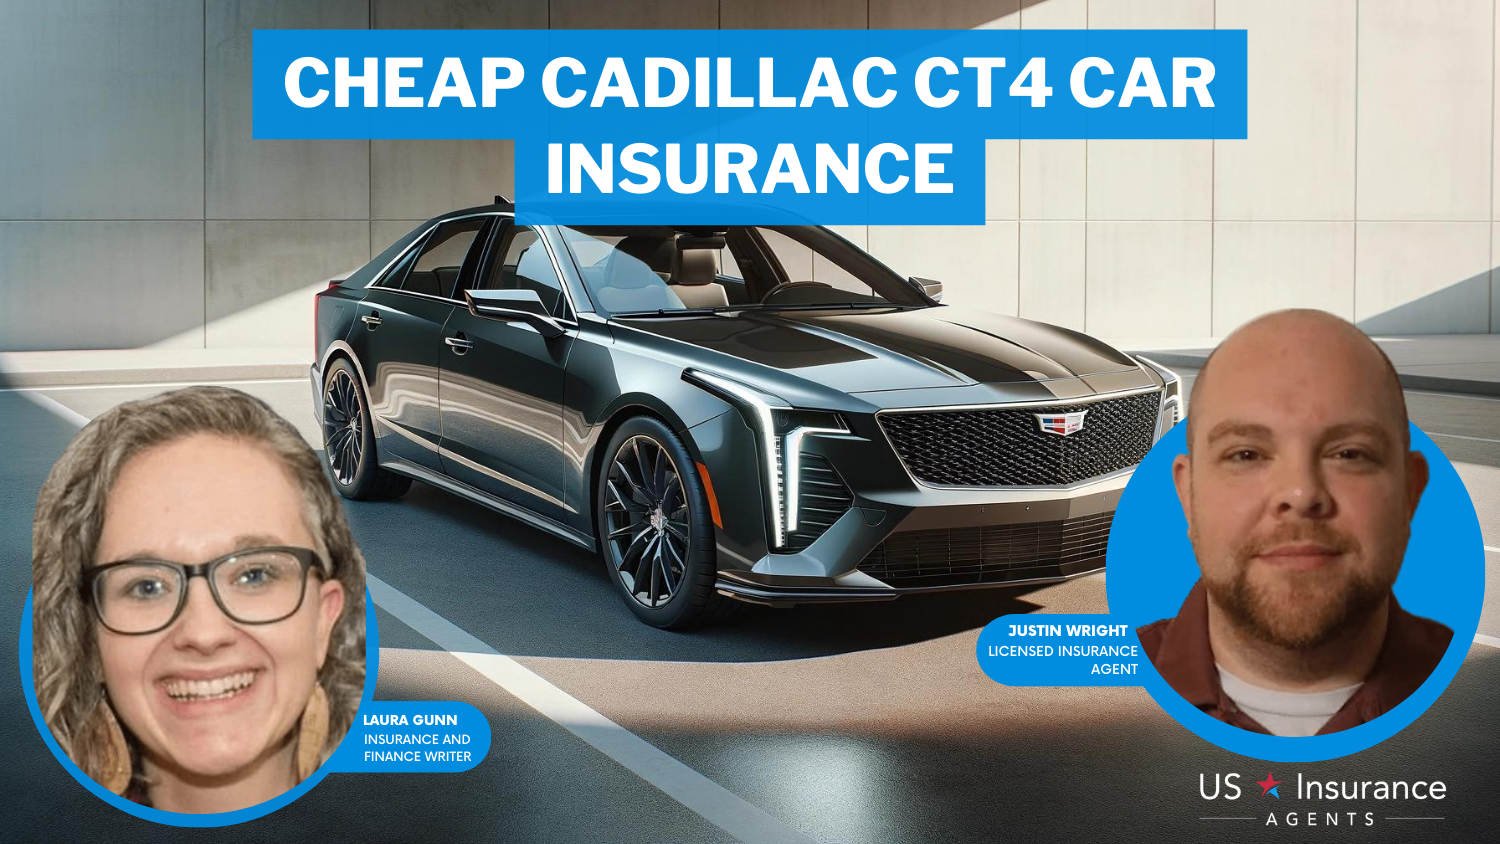 Cheap Cadillac CT4 Car Insurance: Farmers, USAA, and Erie